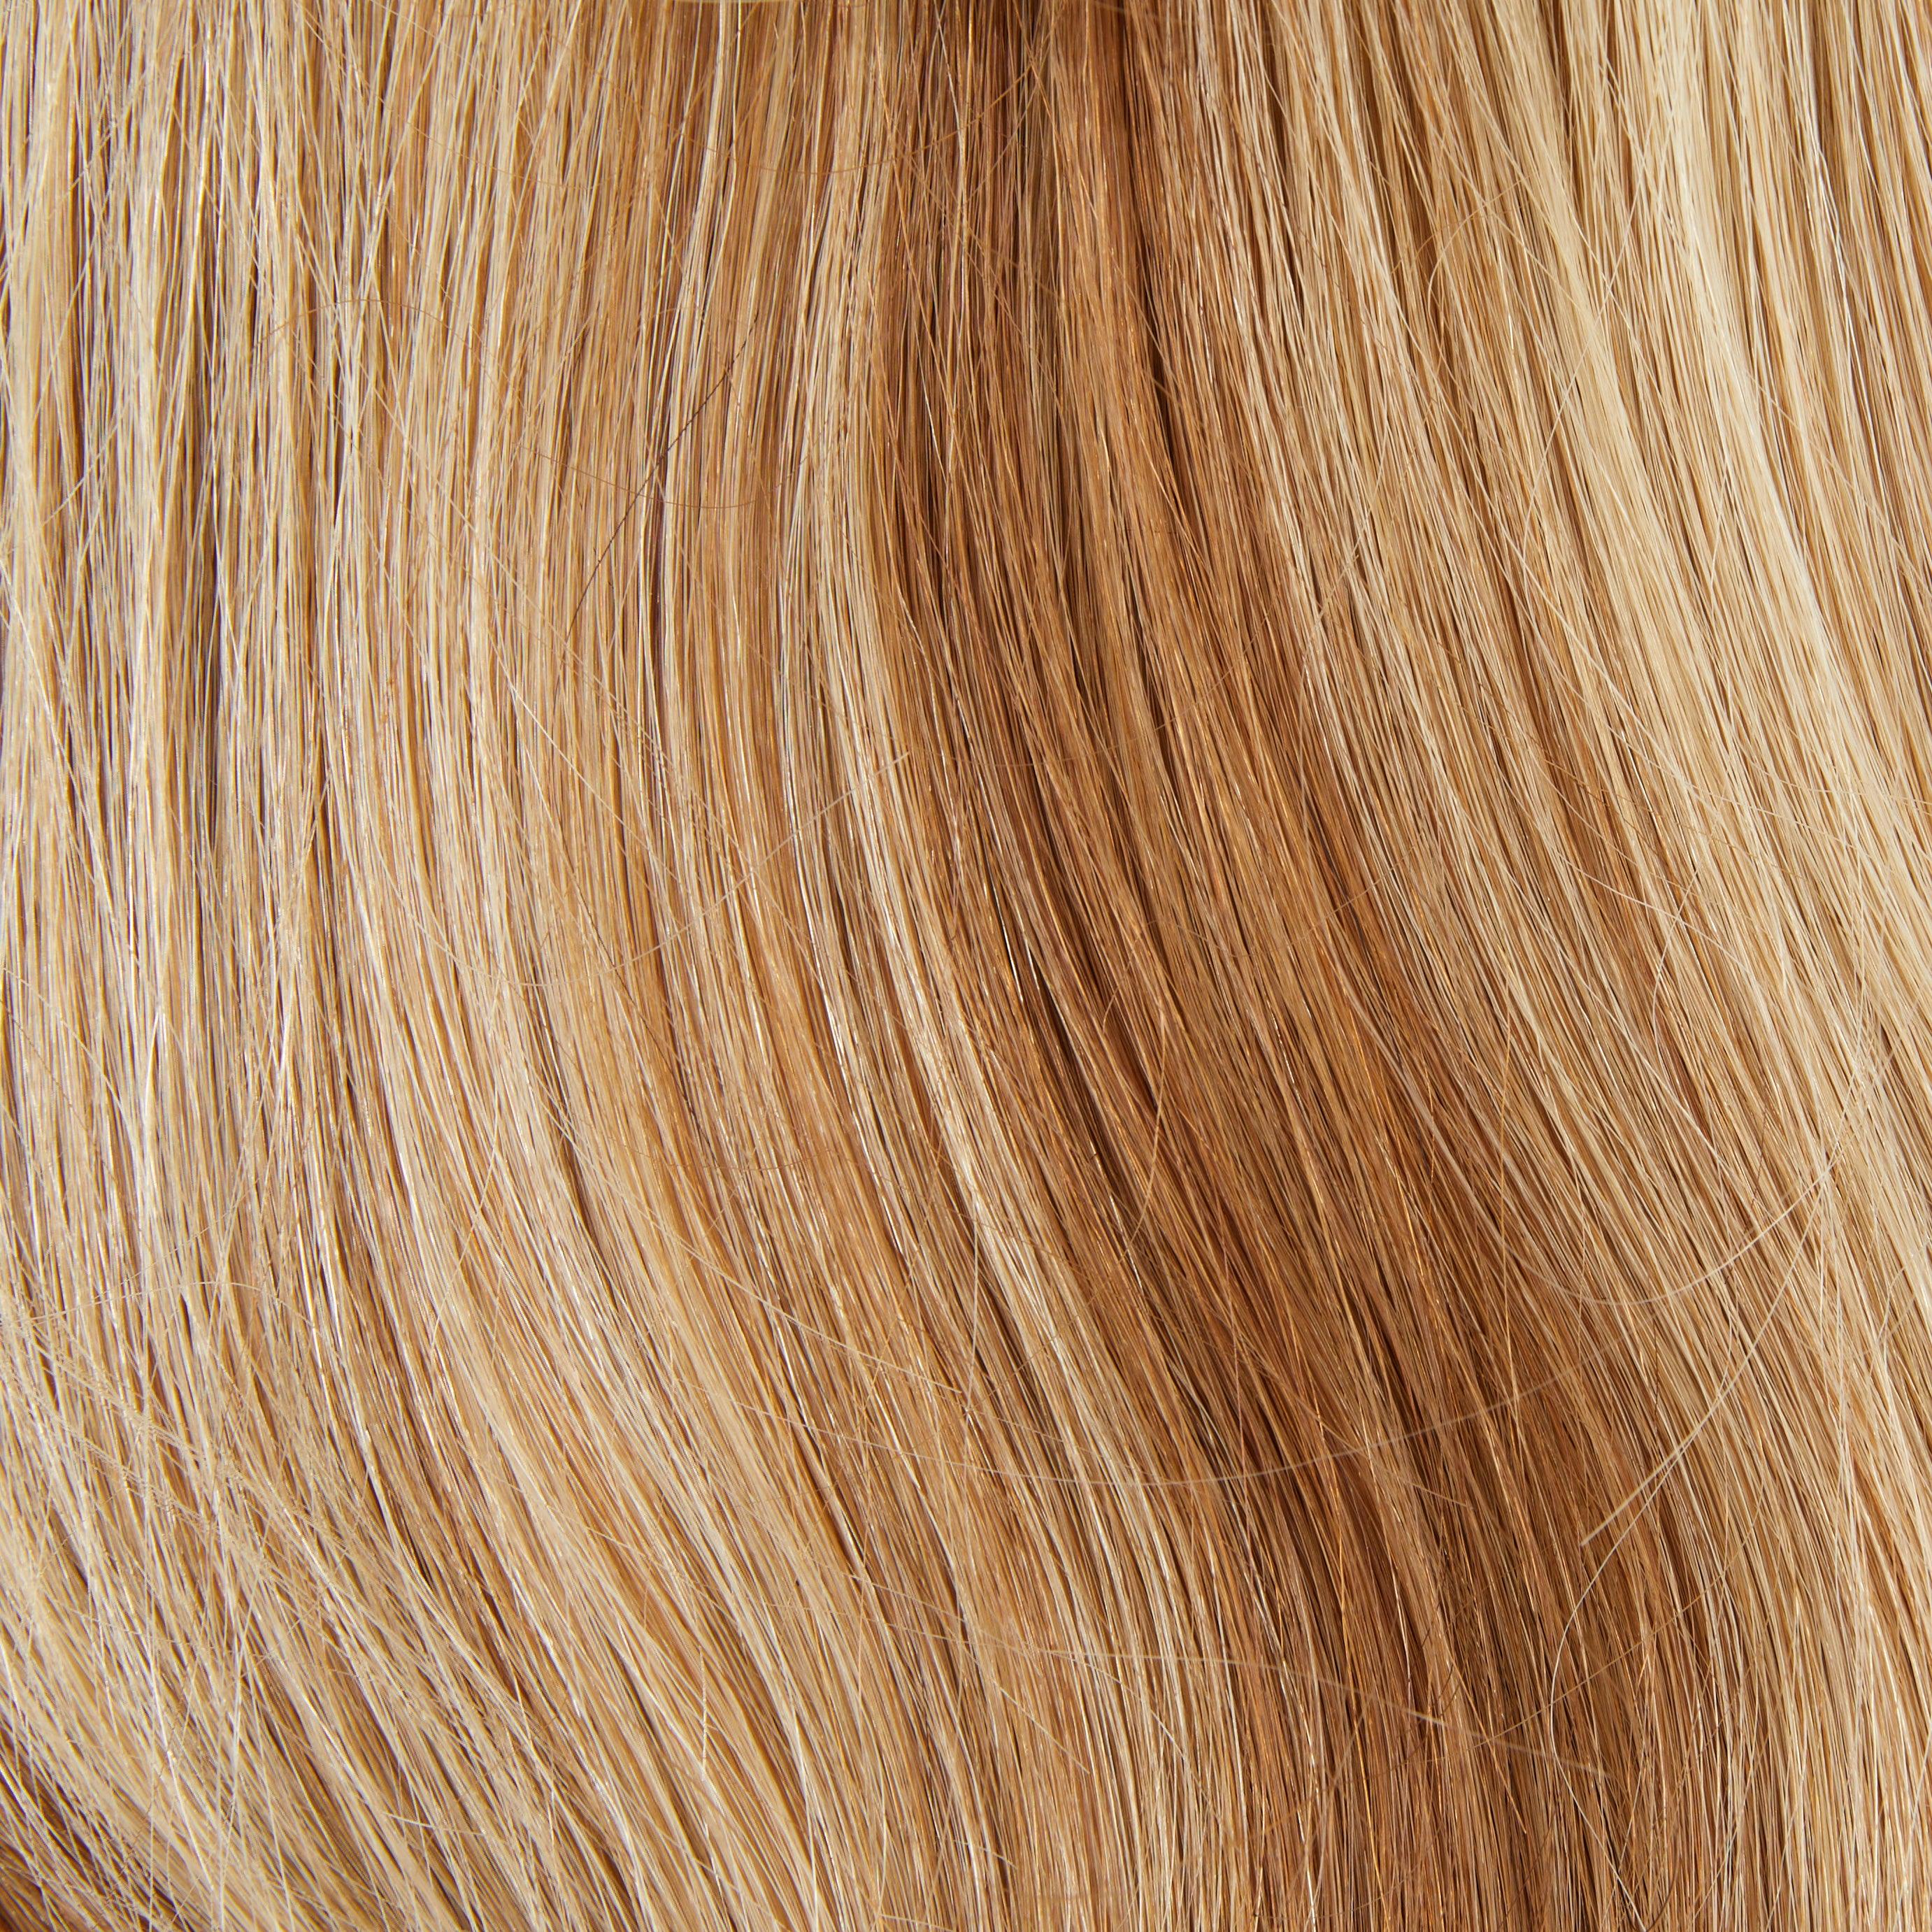 #6-613 Platinum Blond - Medium Brown LACE TOP WIGS - Fortune Wigs